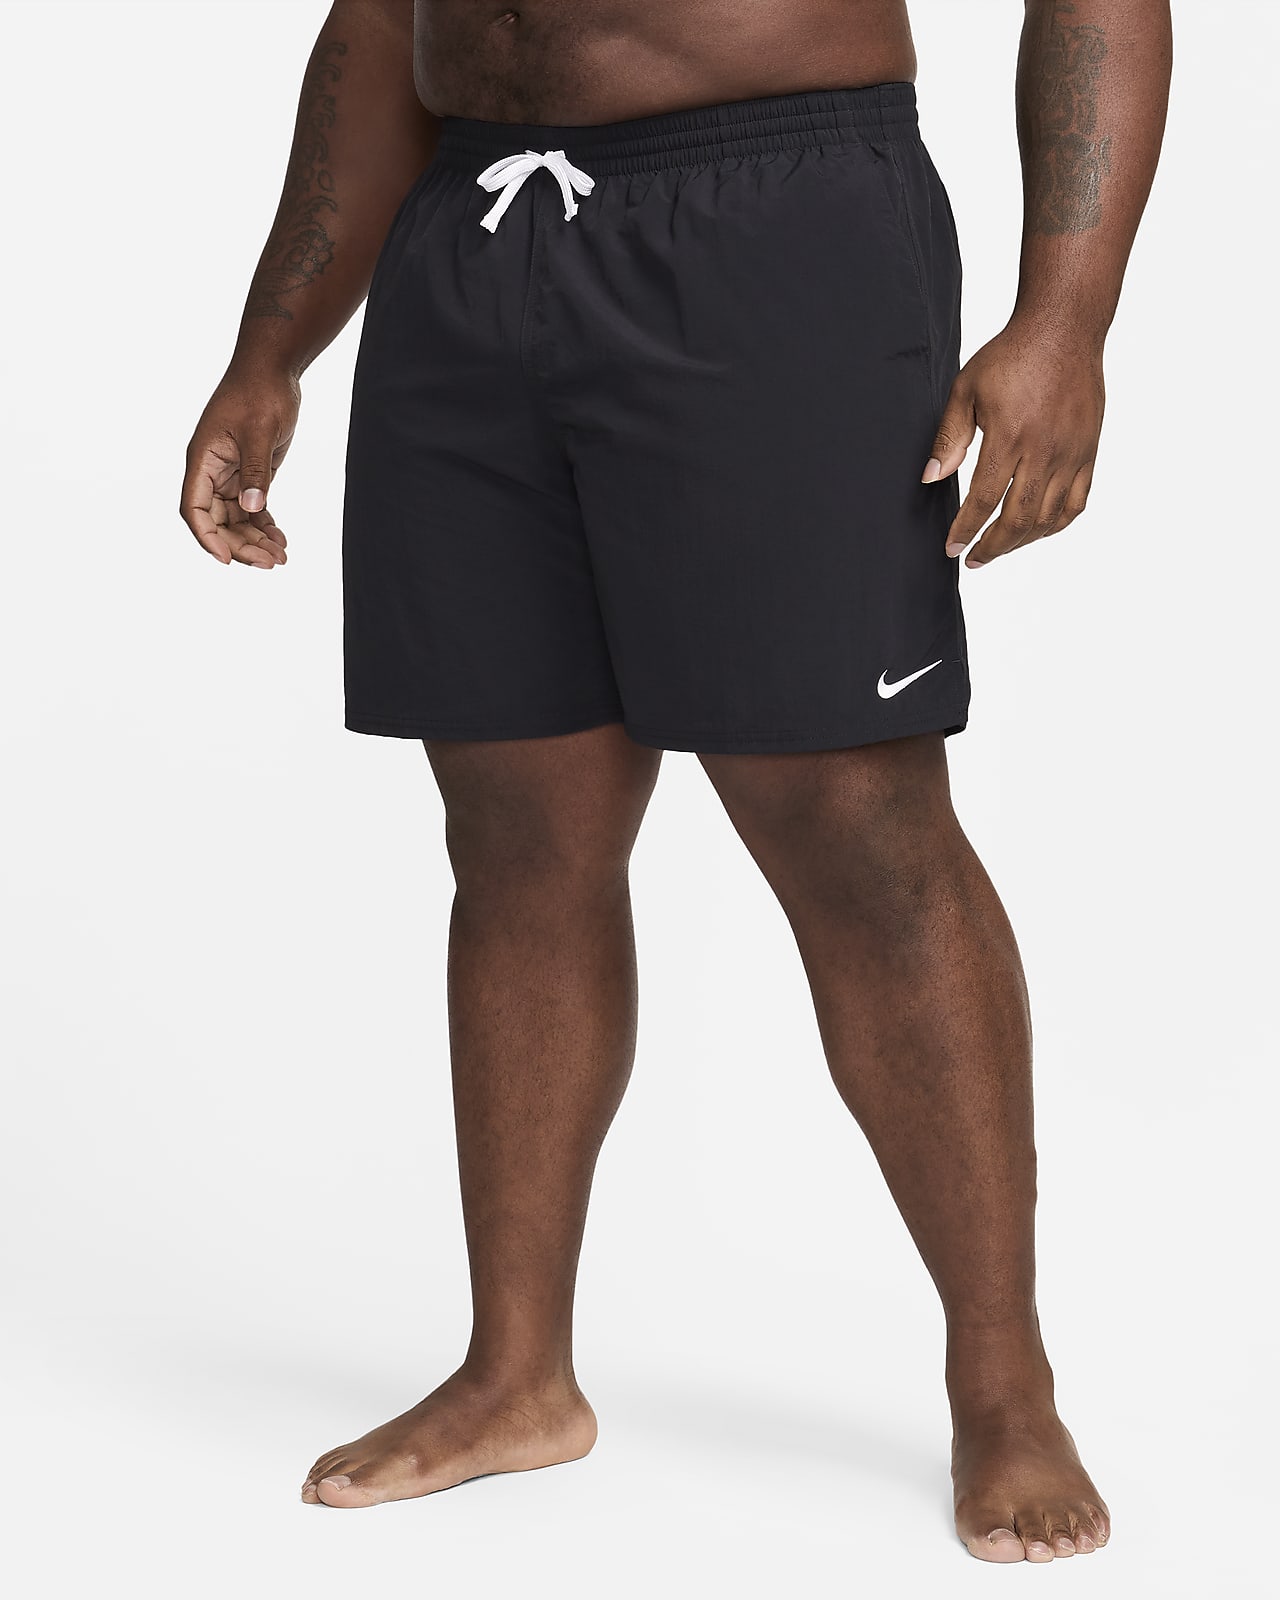 Nike Men's 7 Volley Shorts